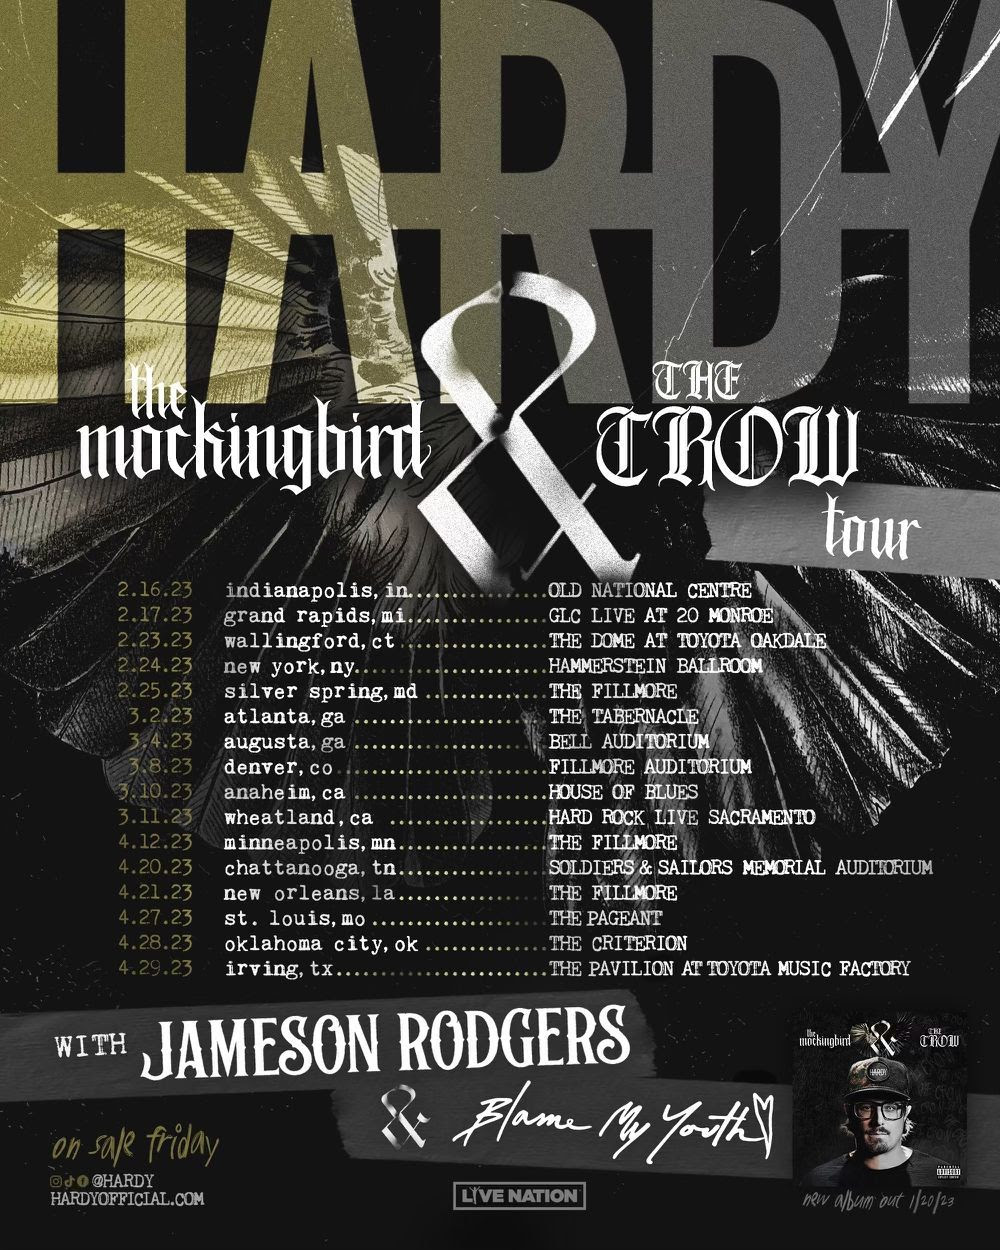 hardy mockingbird tour tickets